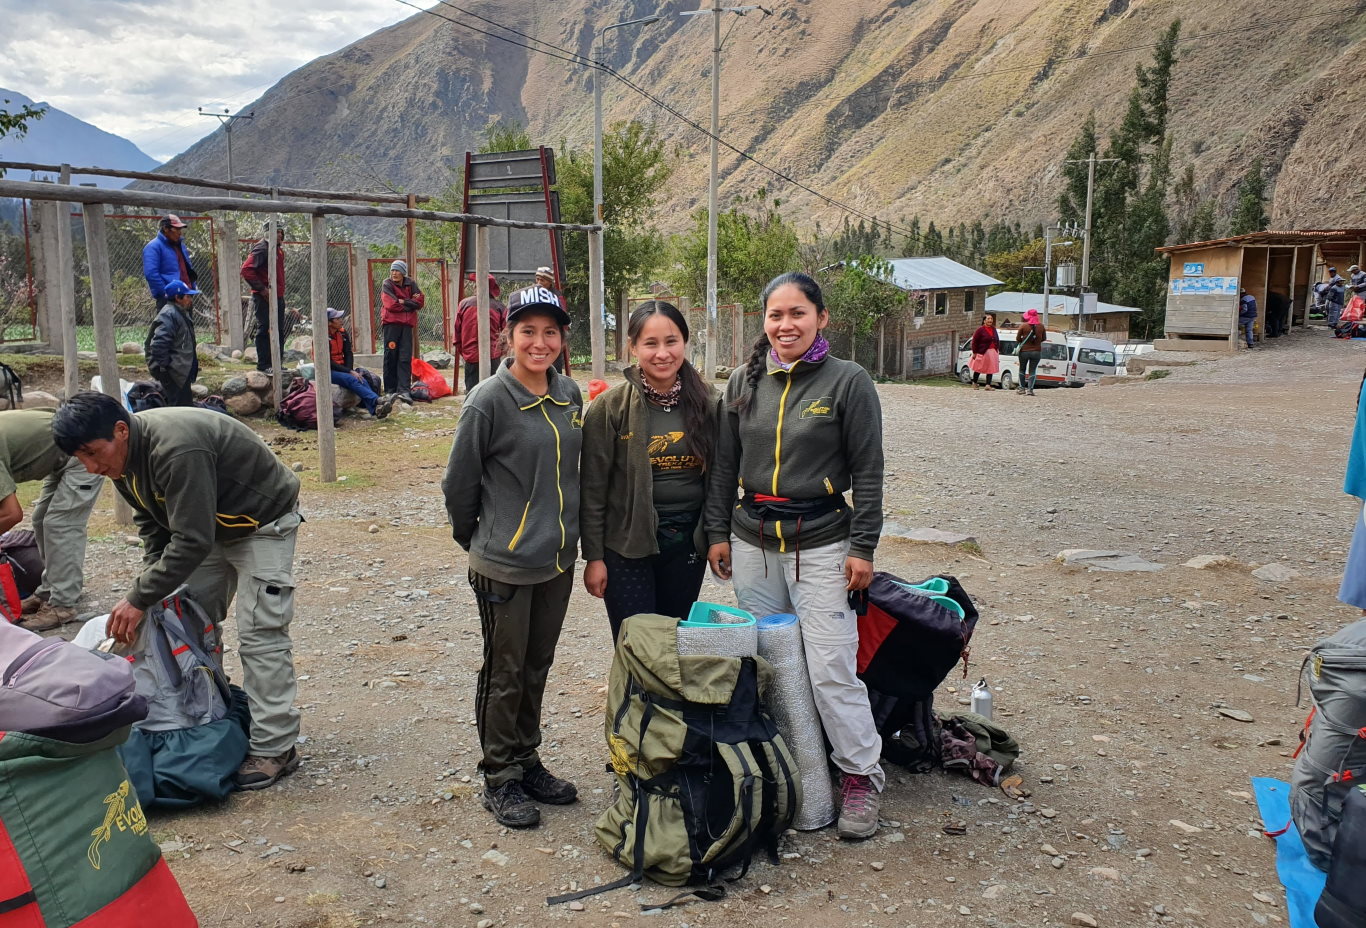 On the Inca Trail to Machu Picchu, Peru's first women porters make